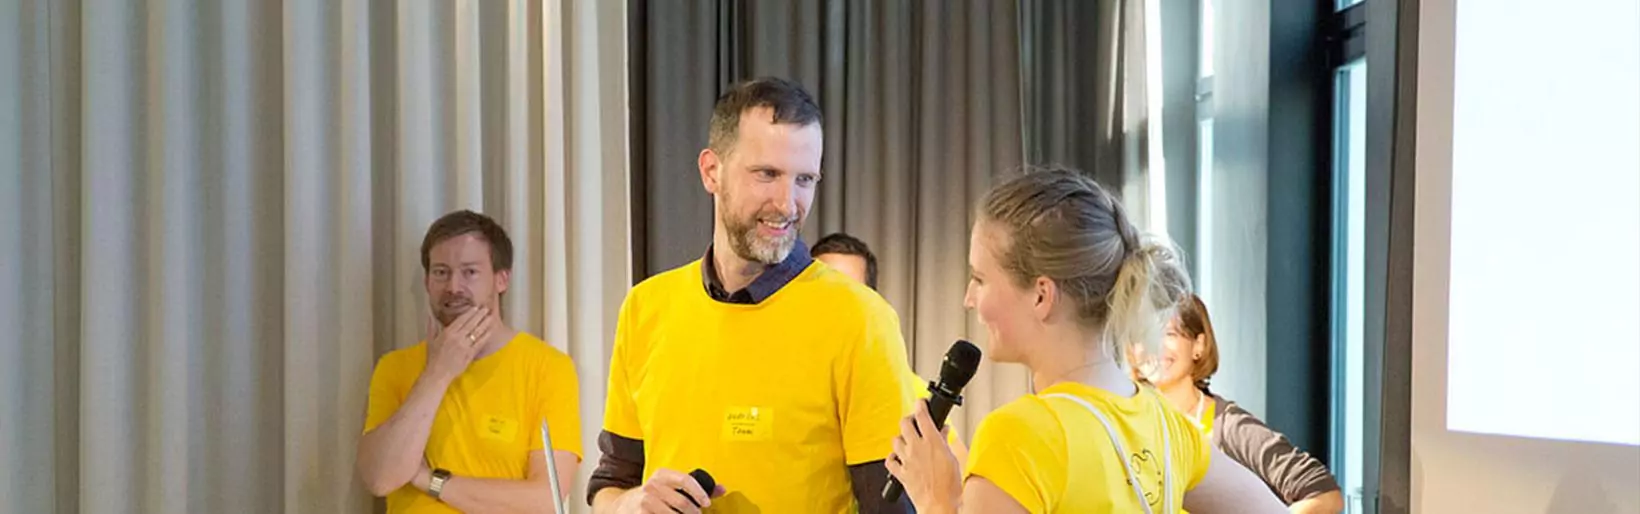 Medienwerft is gold partner of UX CAMP 2018